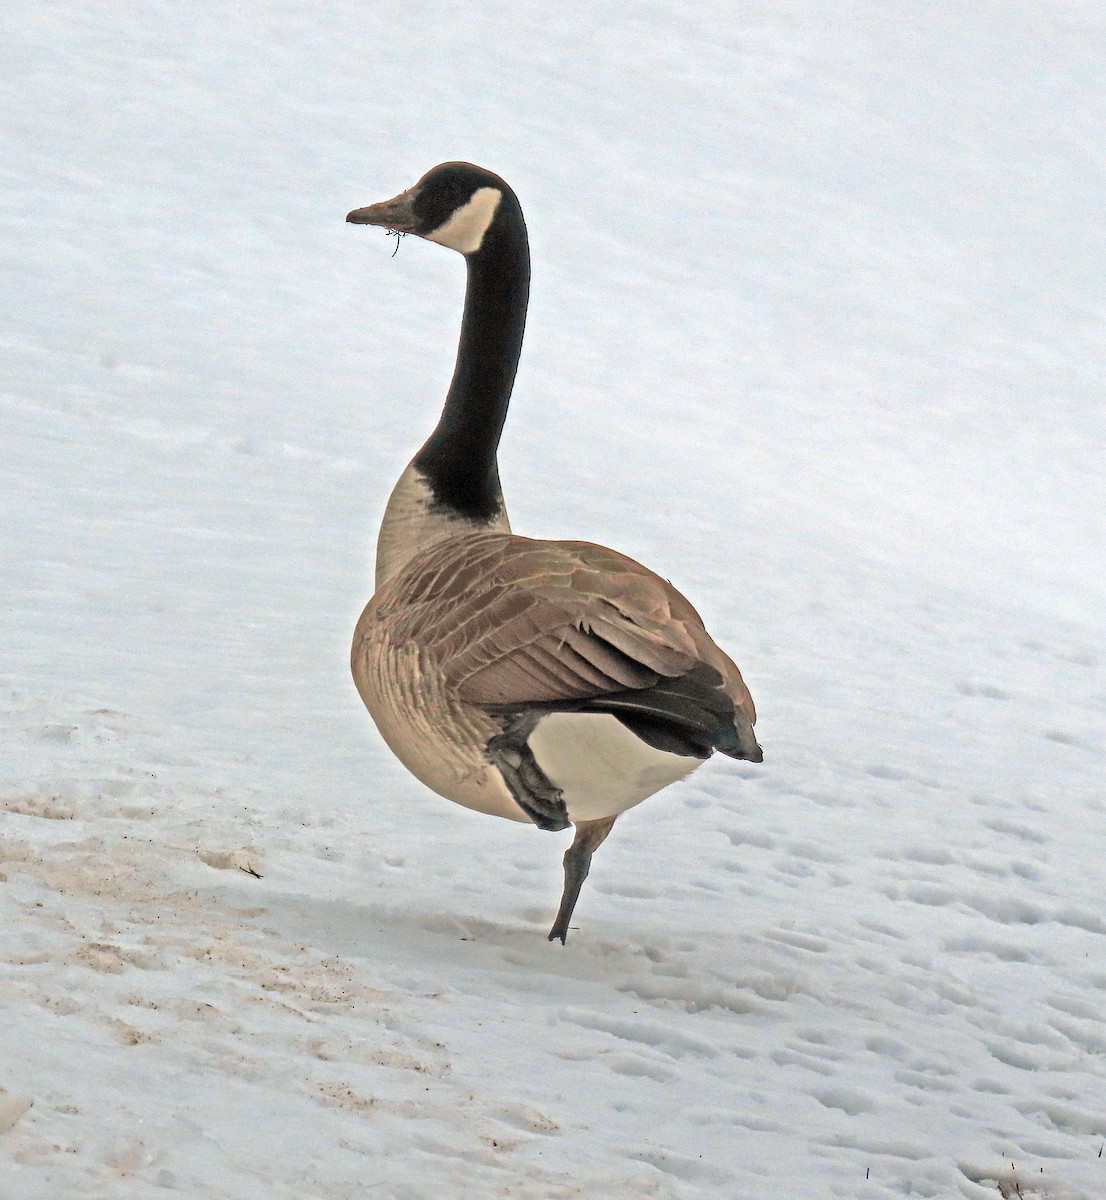 Canada Goose - Shilo McDonald